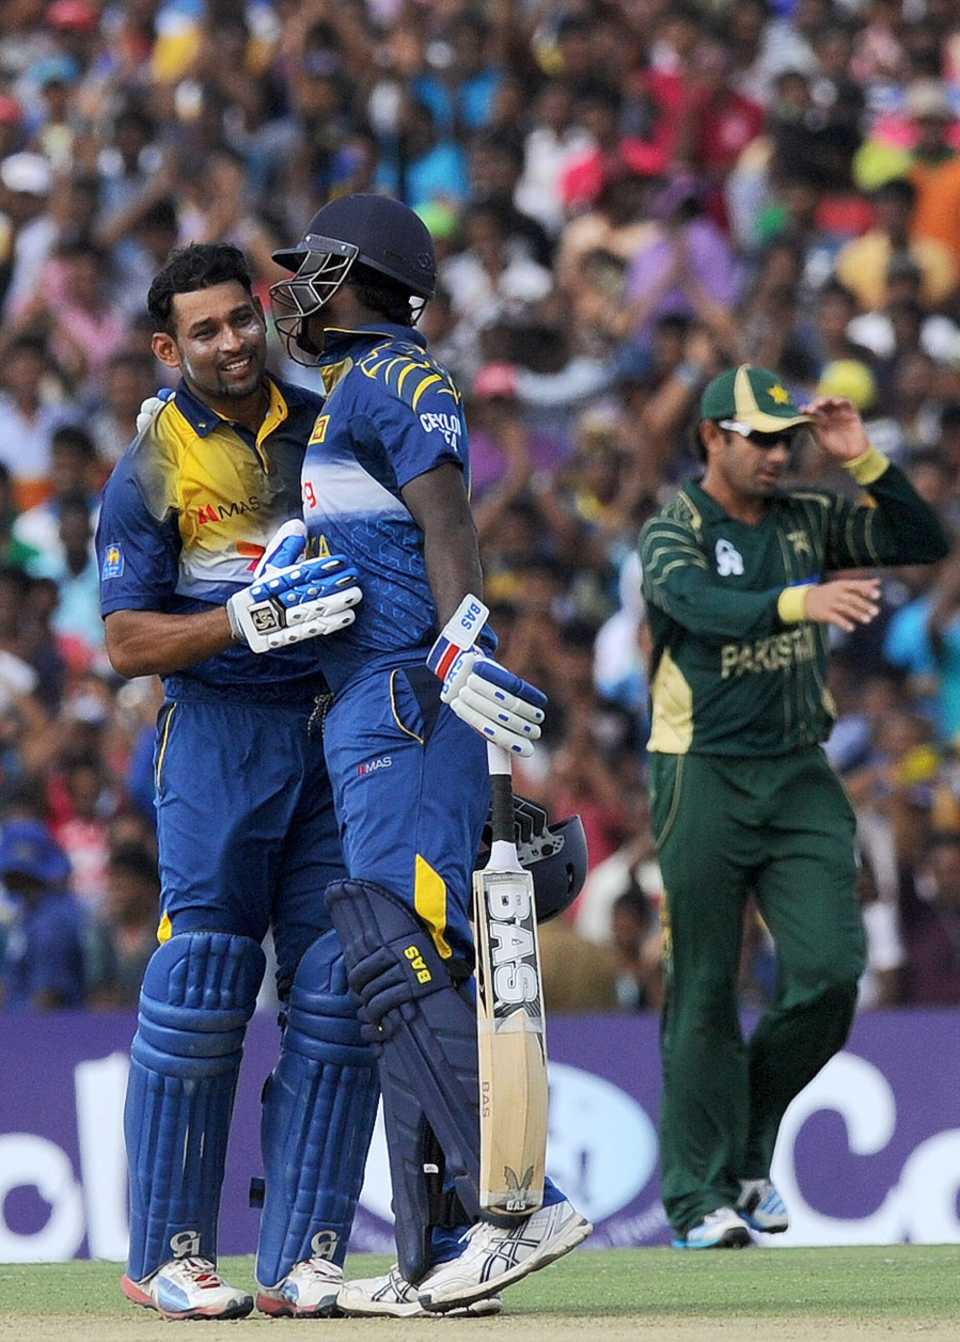 Tillakaratne Dilshan and Angelo Mathews embrace after Sri Lanka's win